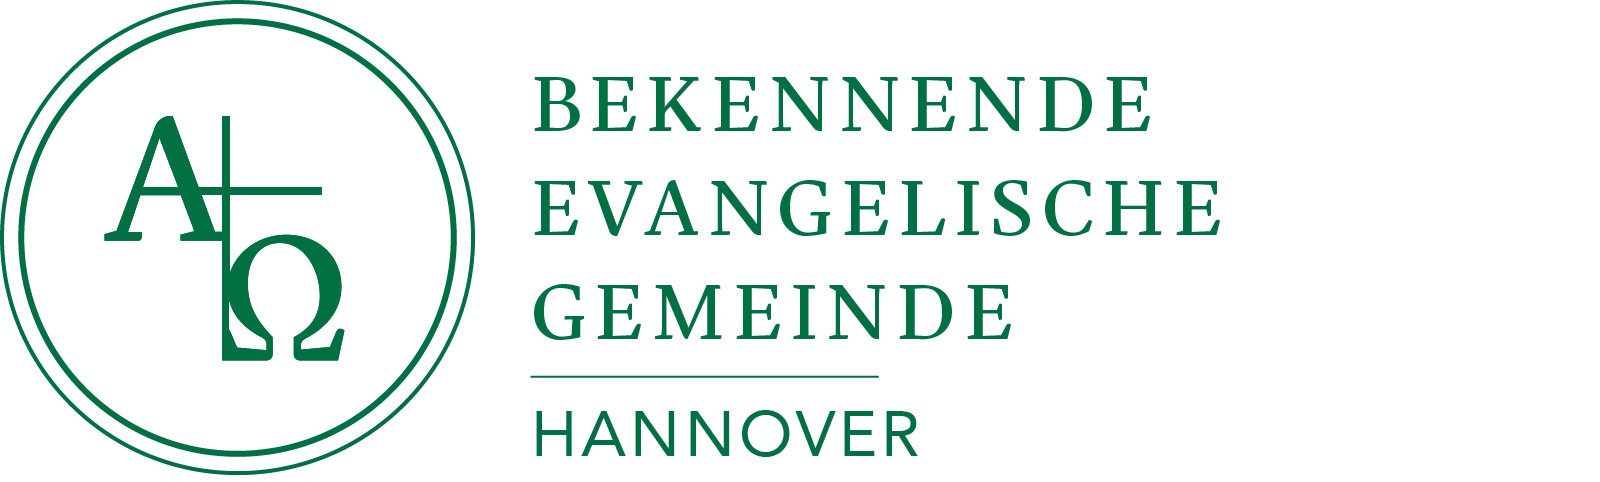 (c) Beg-hannover.de